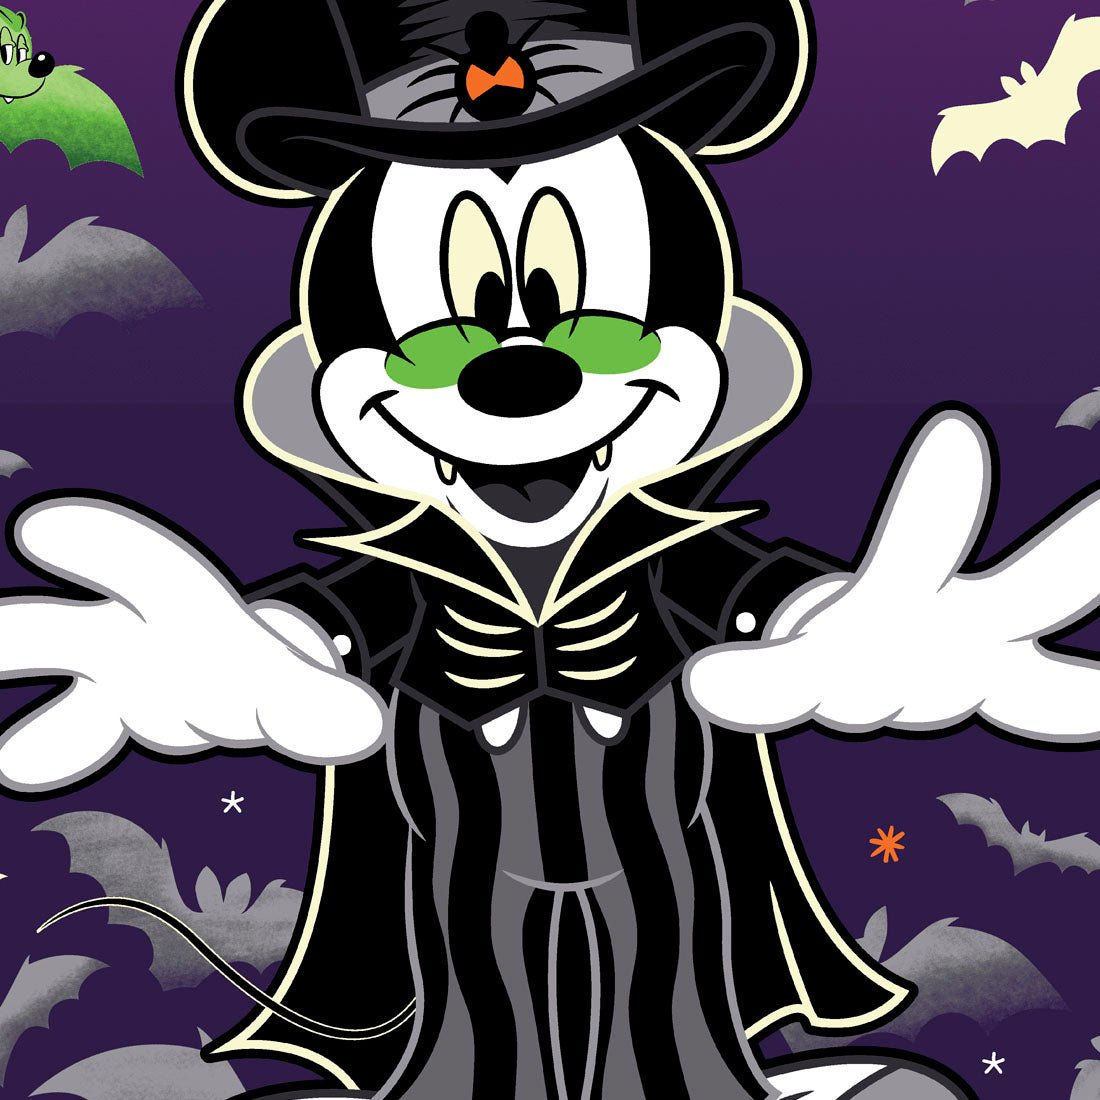 Mickey Mouse Tooniforms Disney Halloween V Neck Scrub Top TF629 MKVAD - Scrubs Select